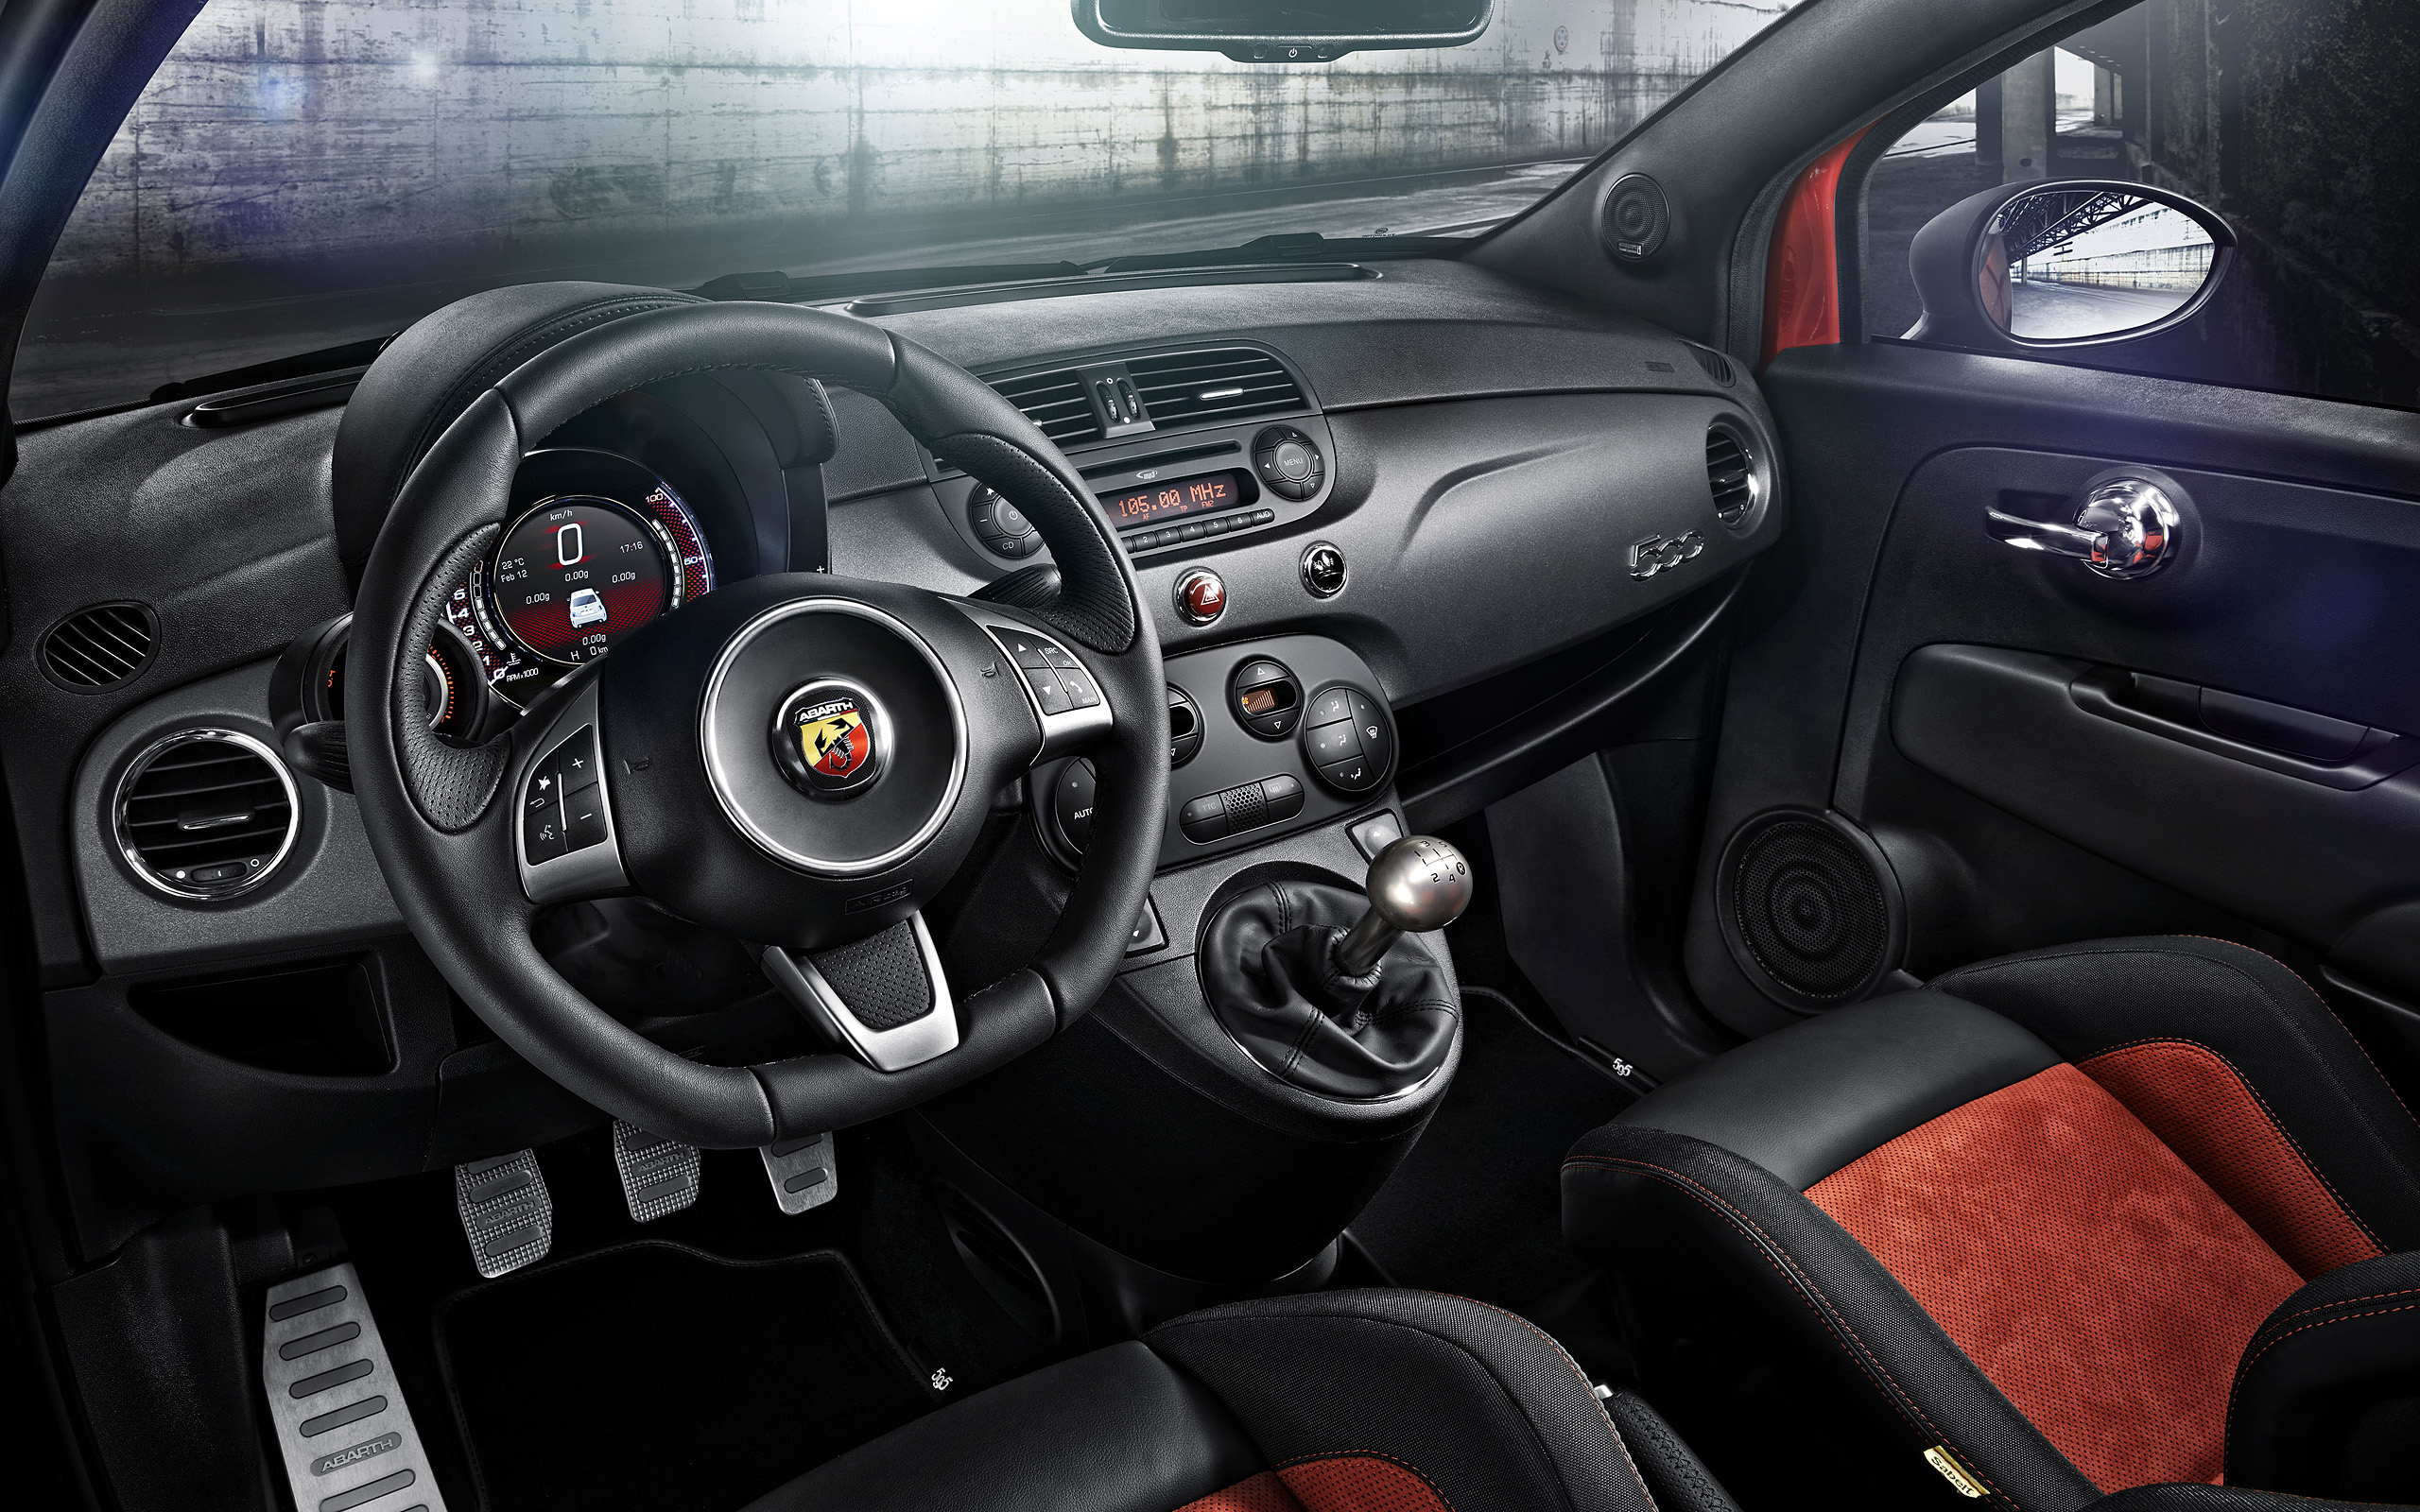  2014 Fiat Abarth 595 Wallpaper.